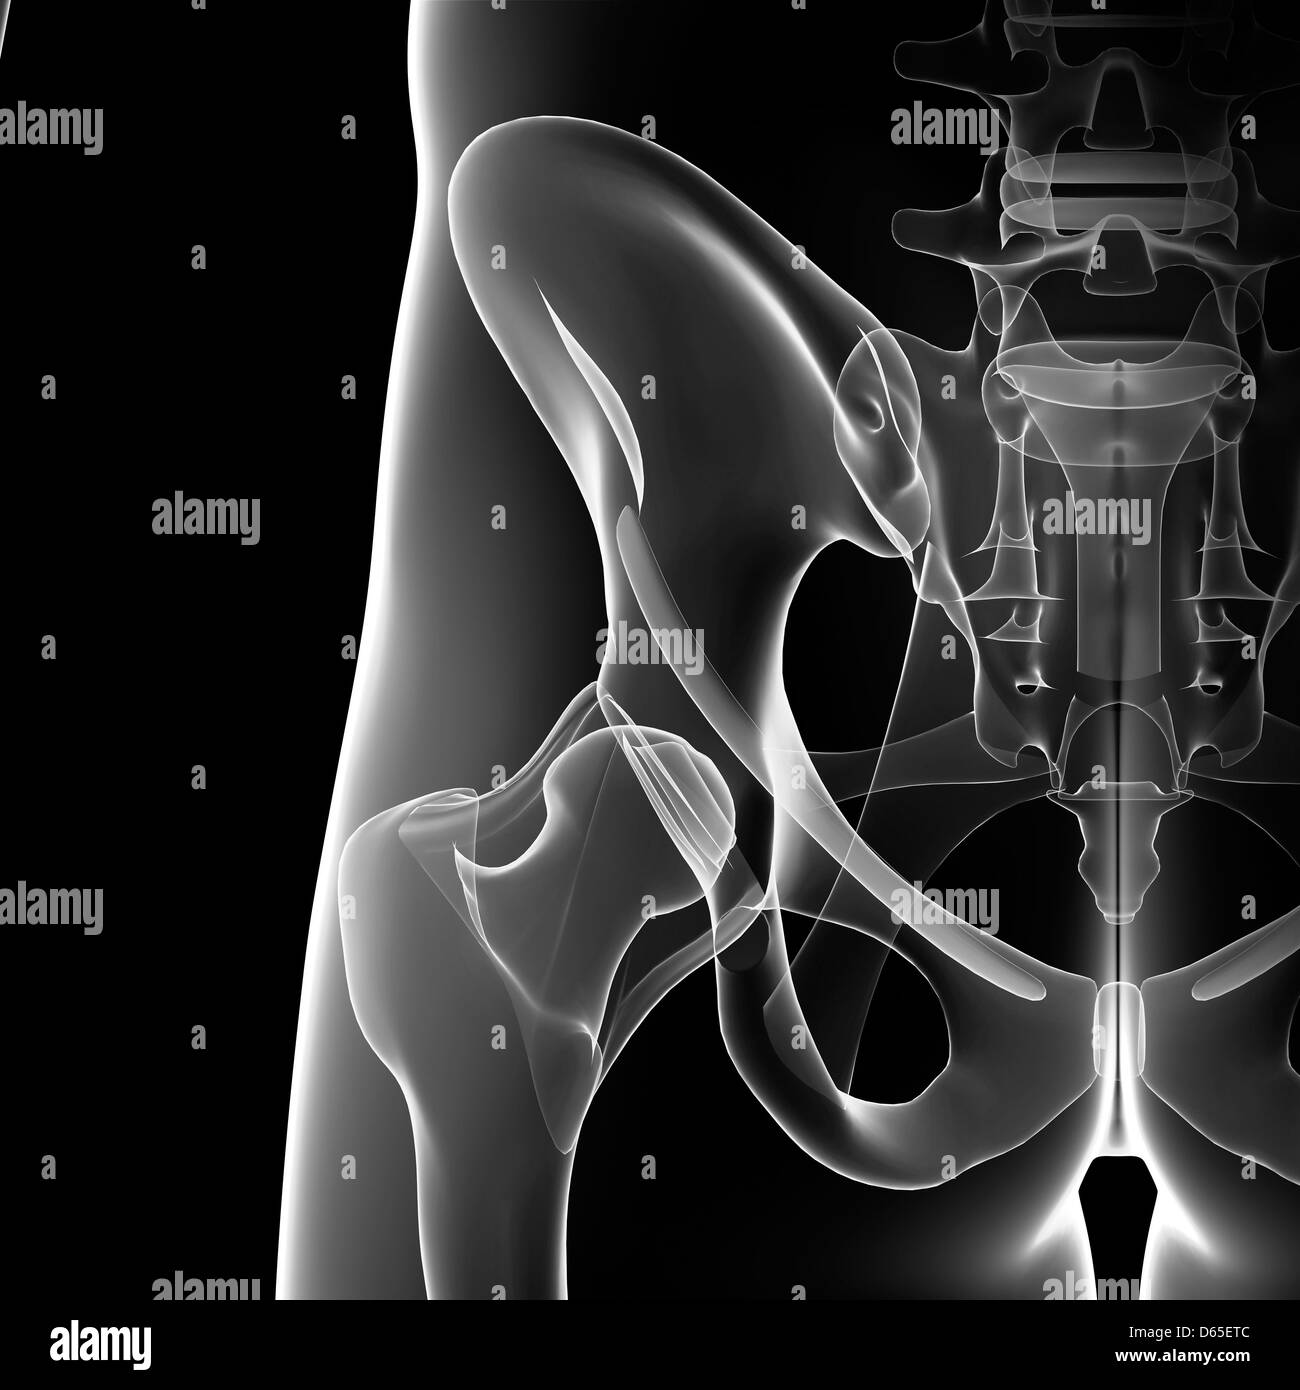 Los huesos de la pelvis masculina, ilustraciones Foto de stock